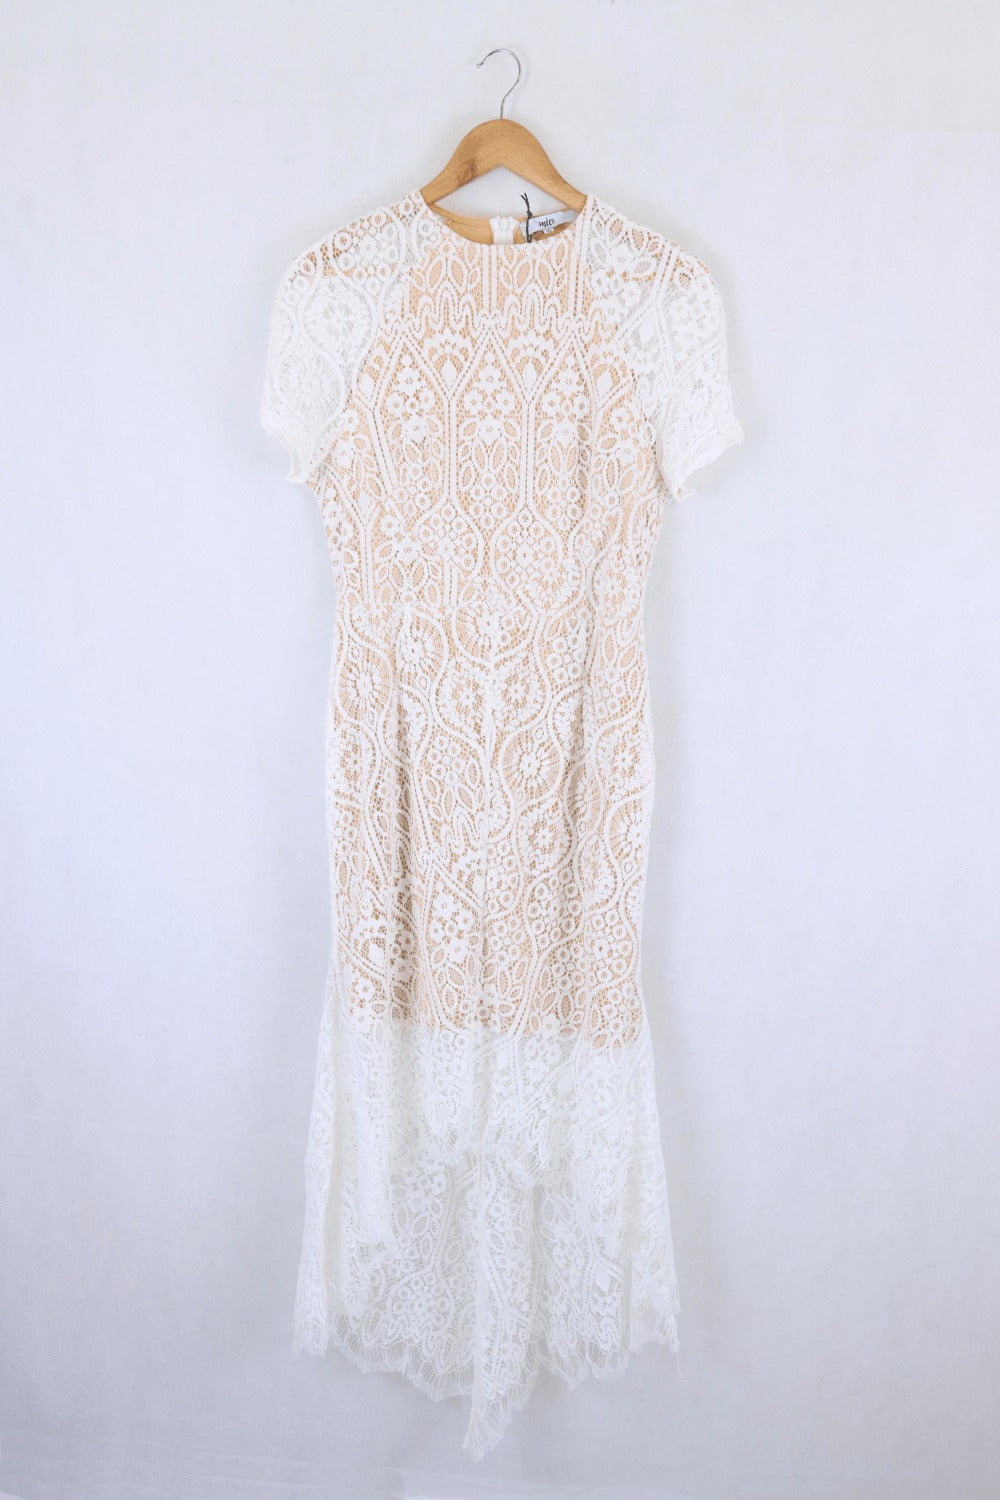 Mia White Lace Dress 16